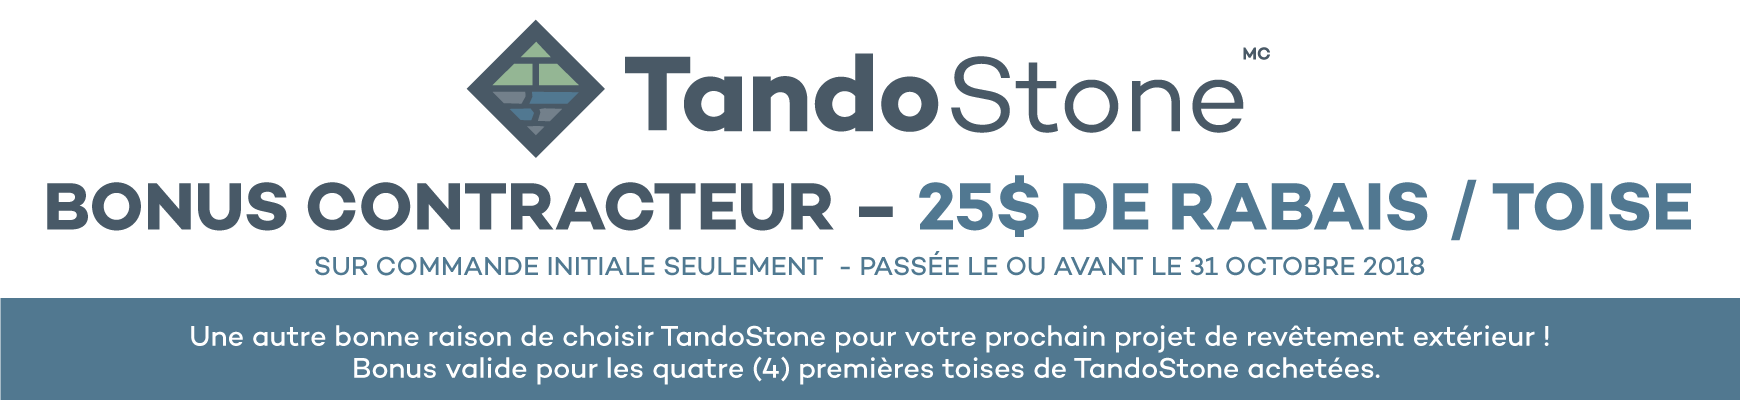 TandoStone_Campaign_ContractorRebate_WebHeader_1700x450-V2-FR